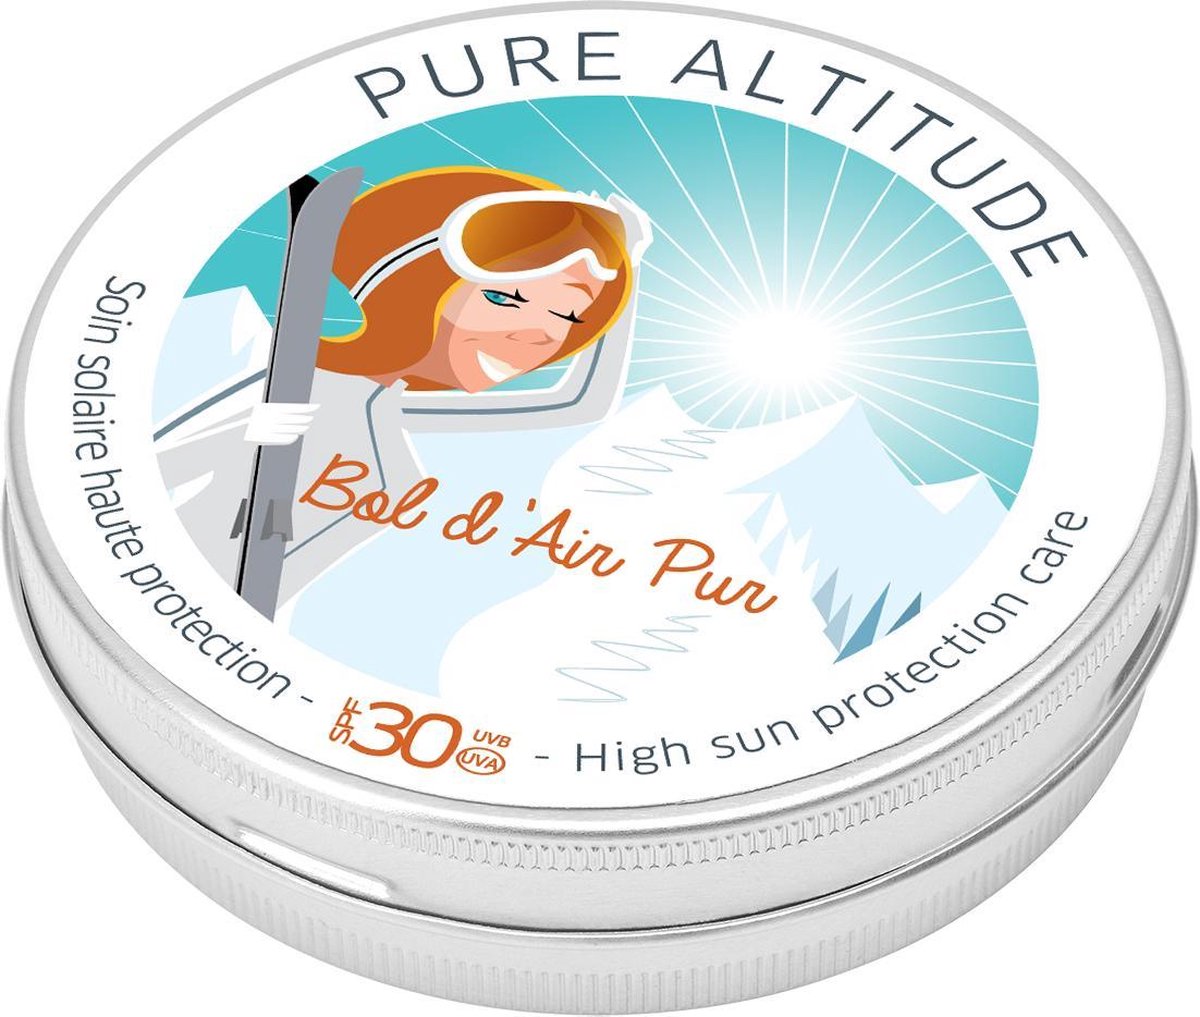 Pure Altitude - Bol d'Air Pur - Zonnecrème SPF 30